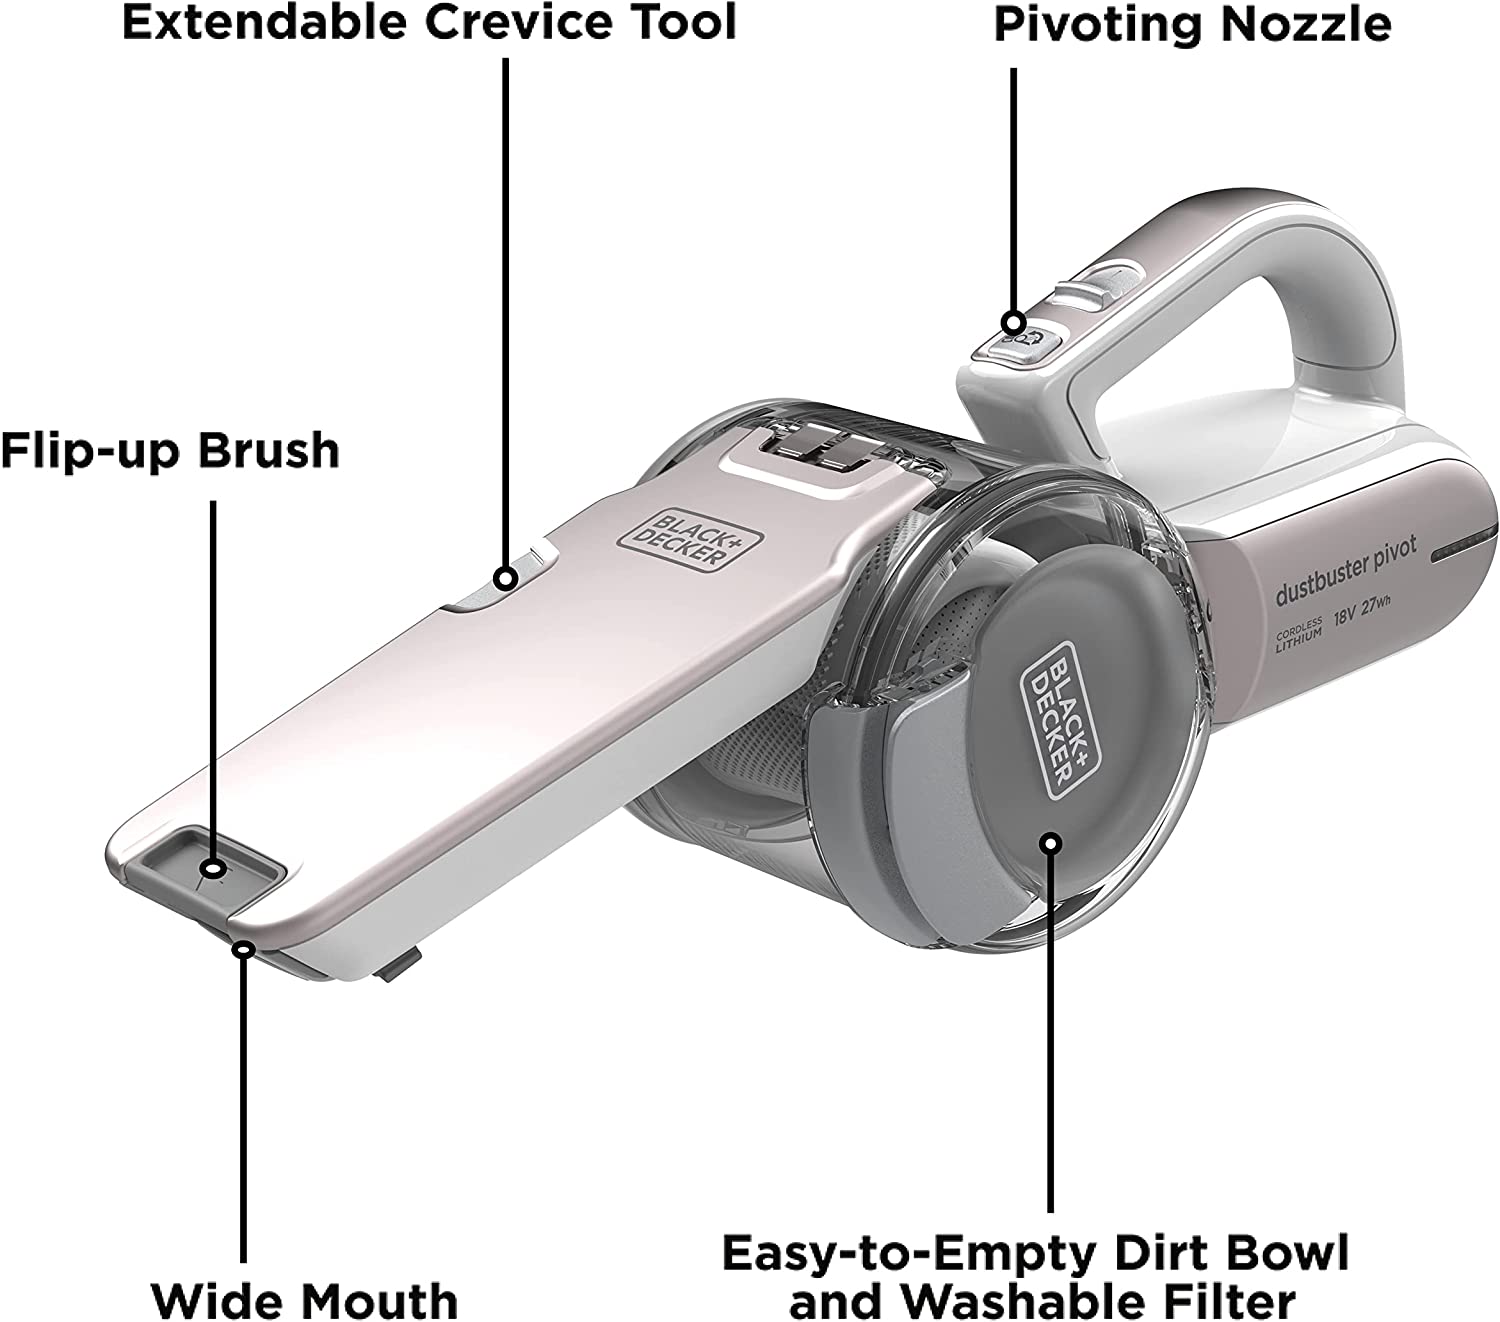 جارو شارژی بلک اند دکر  Black+Decker Cordless Dustbuster Pivot Handheld Vacuum Cleaner - ارسال ۱۰ الی ۱۵ روز کاری